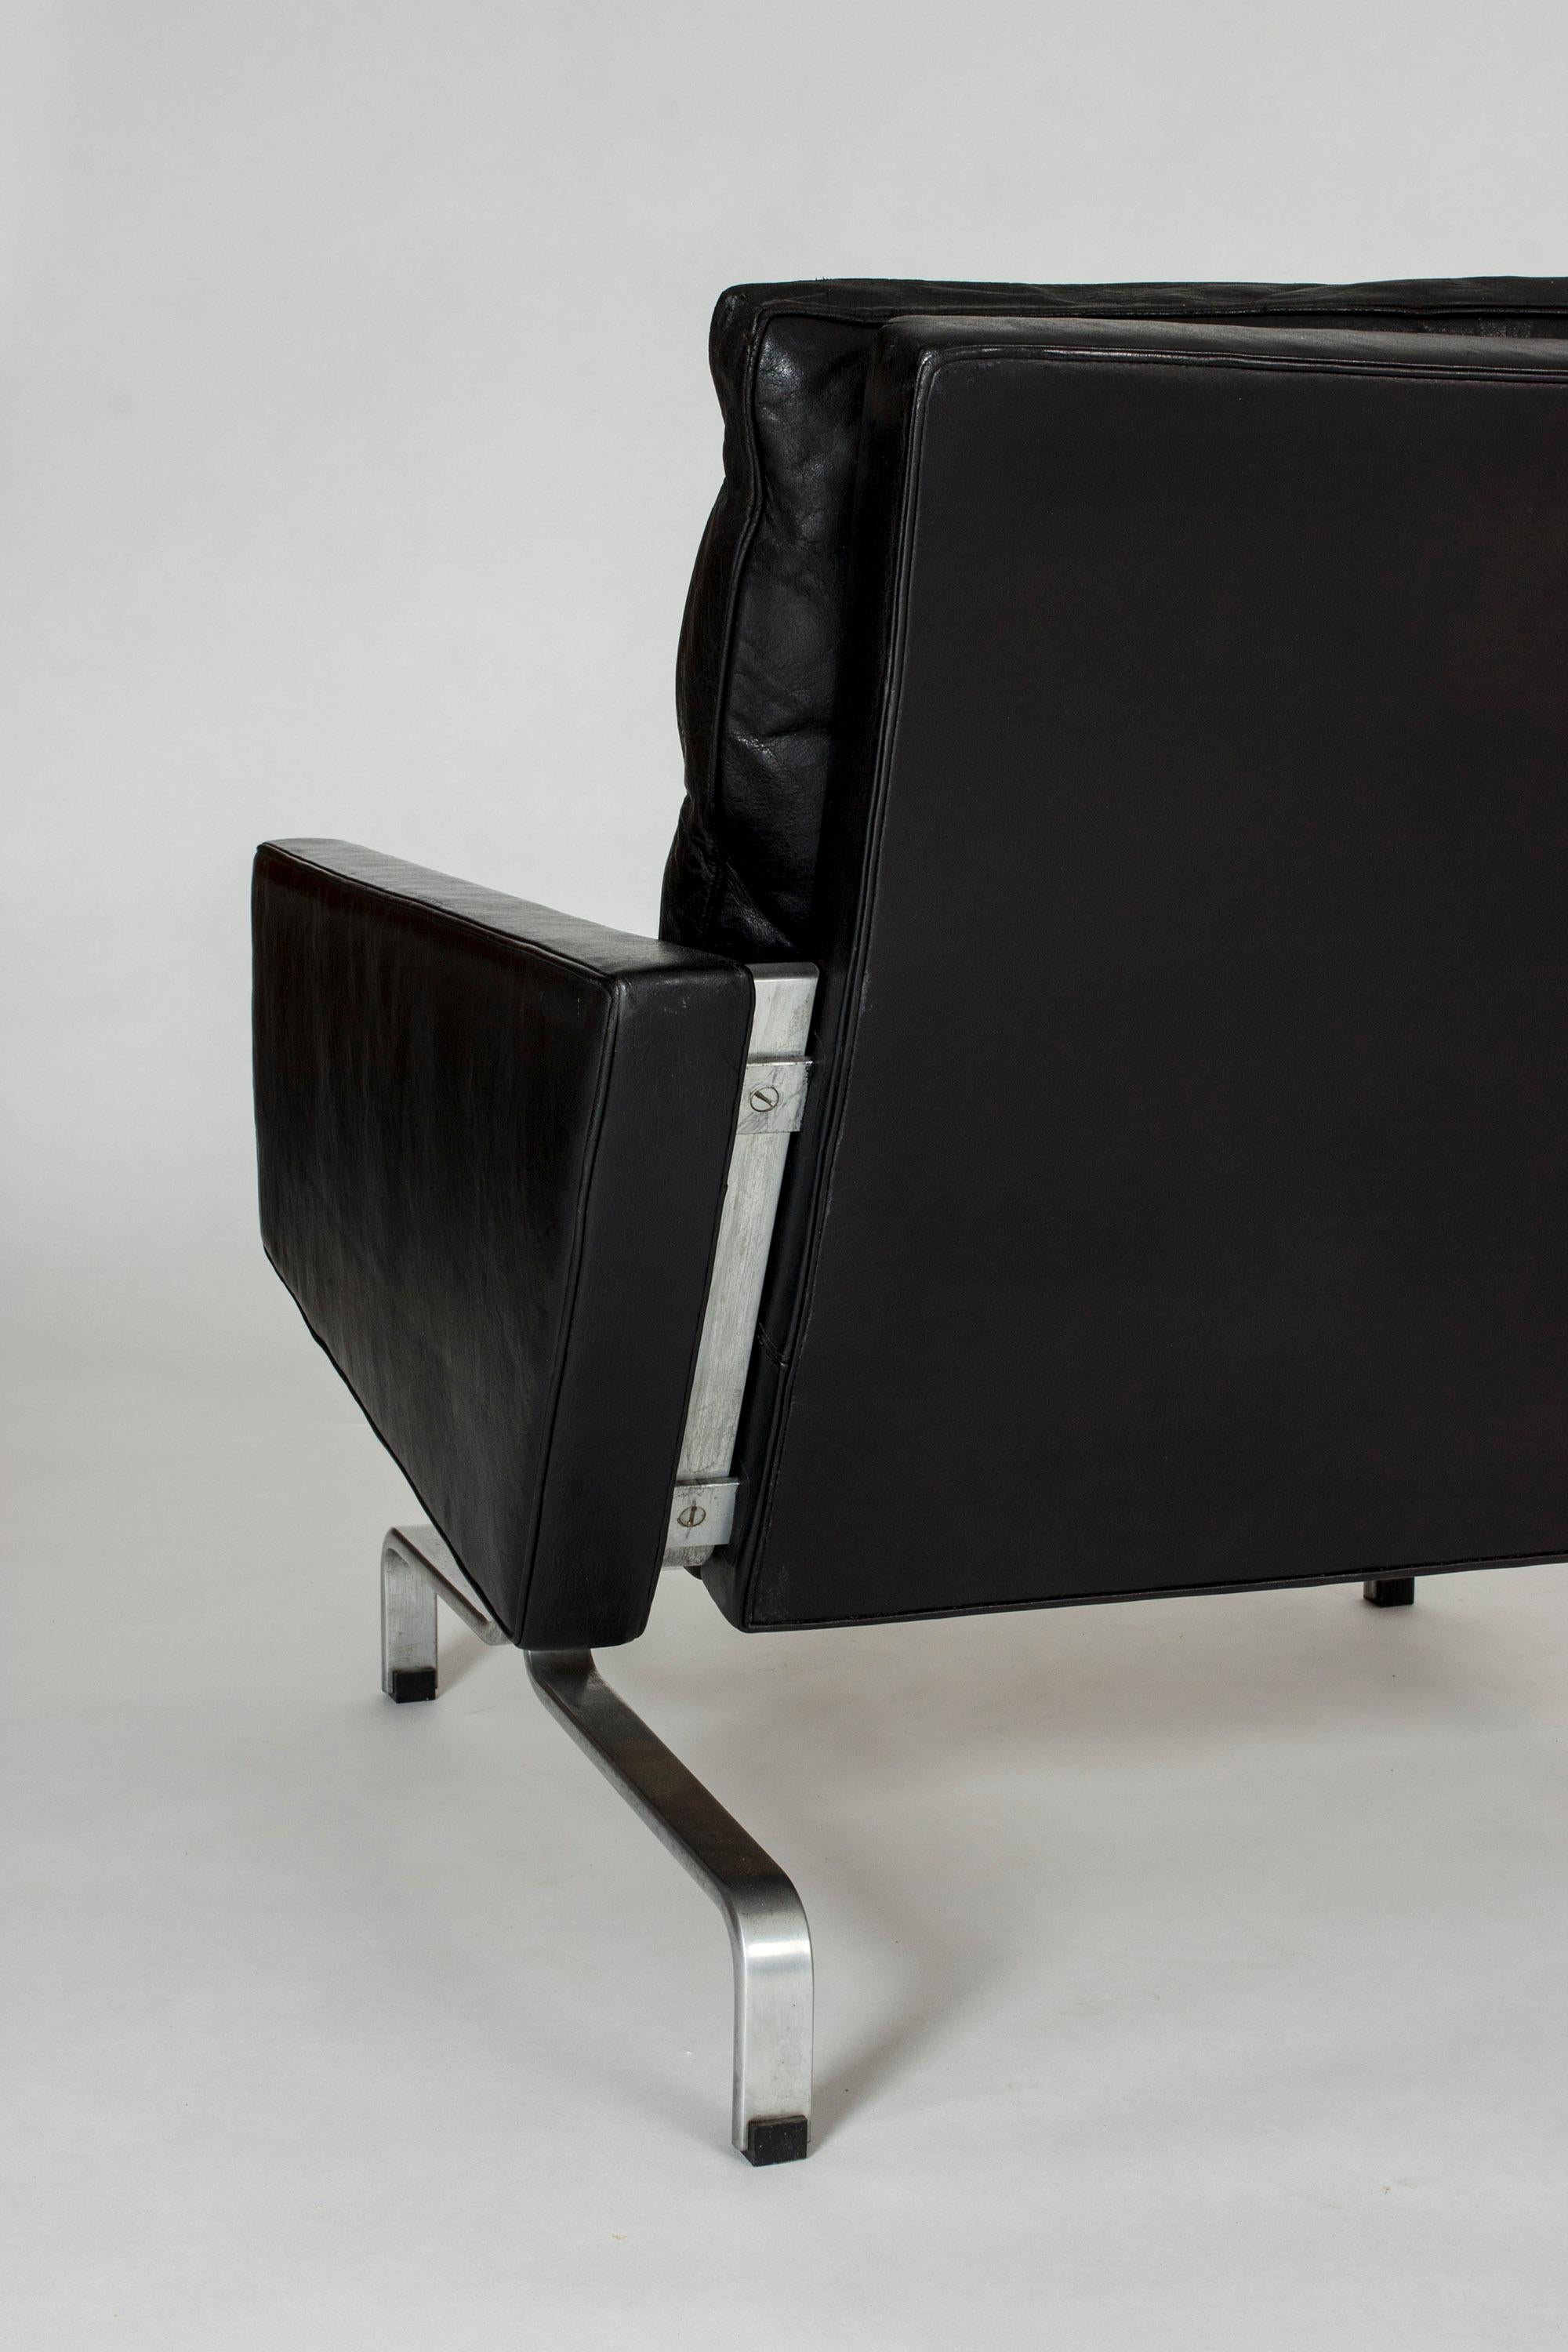 Pair of “PK 31” Lounge Chairs by Poul Kjærholm for E. Kold Christensen 2